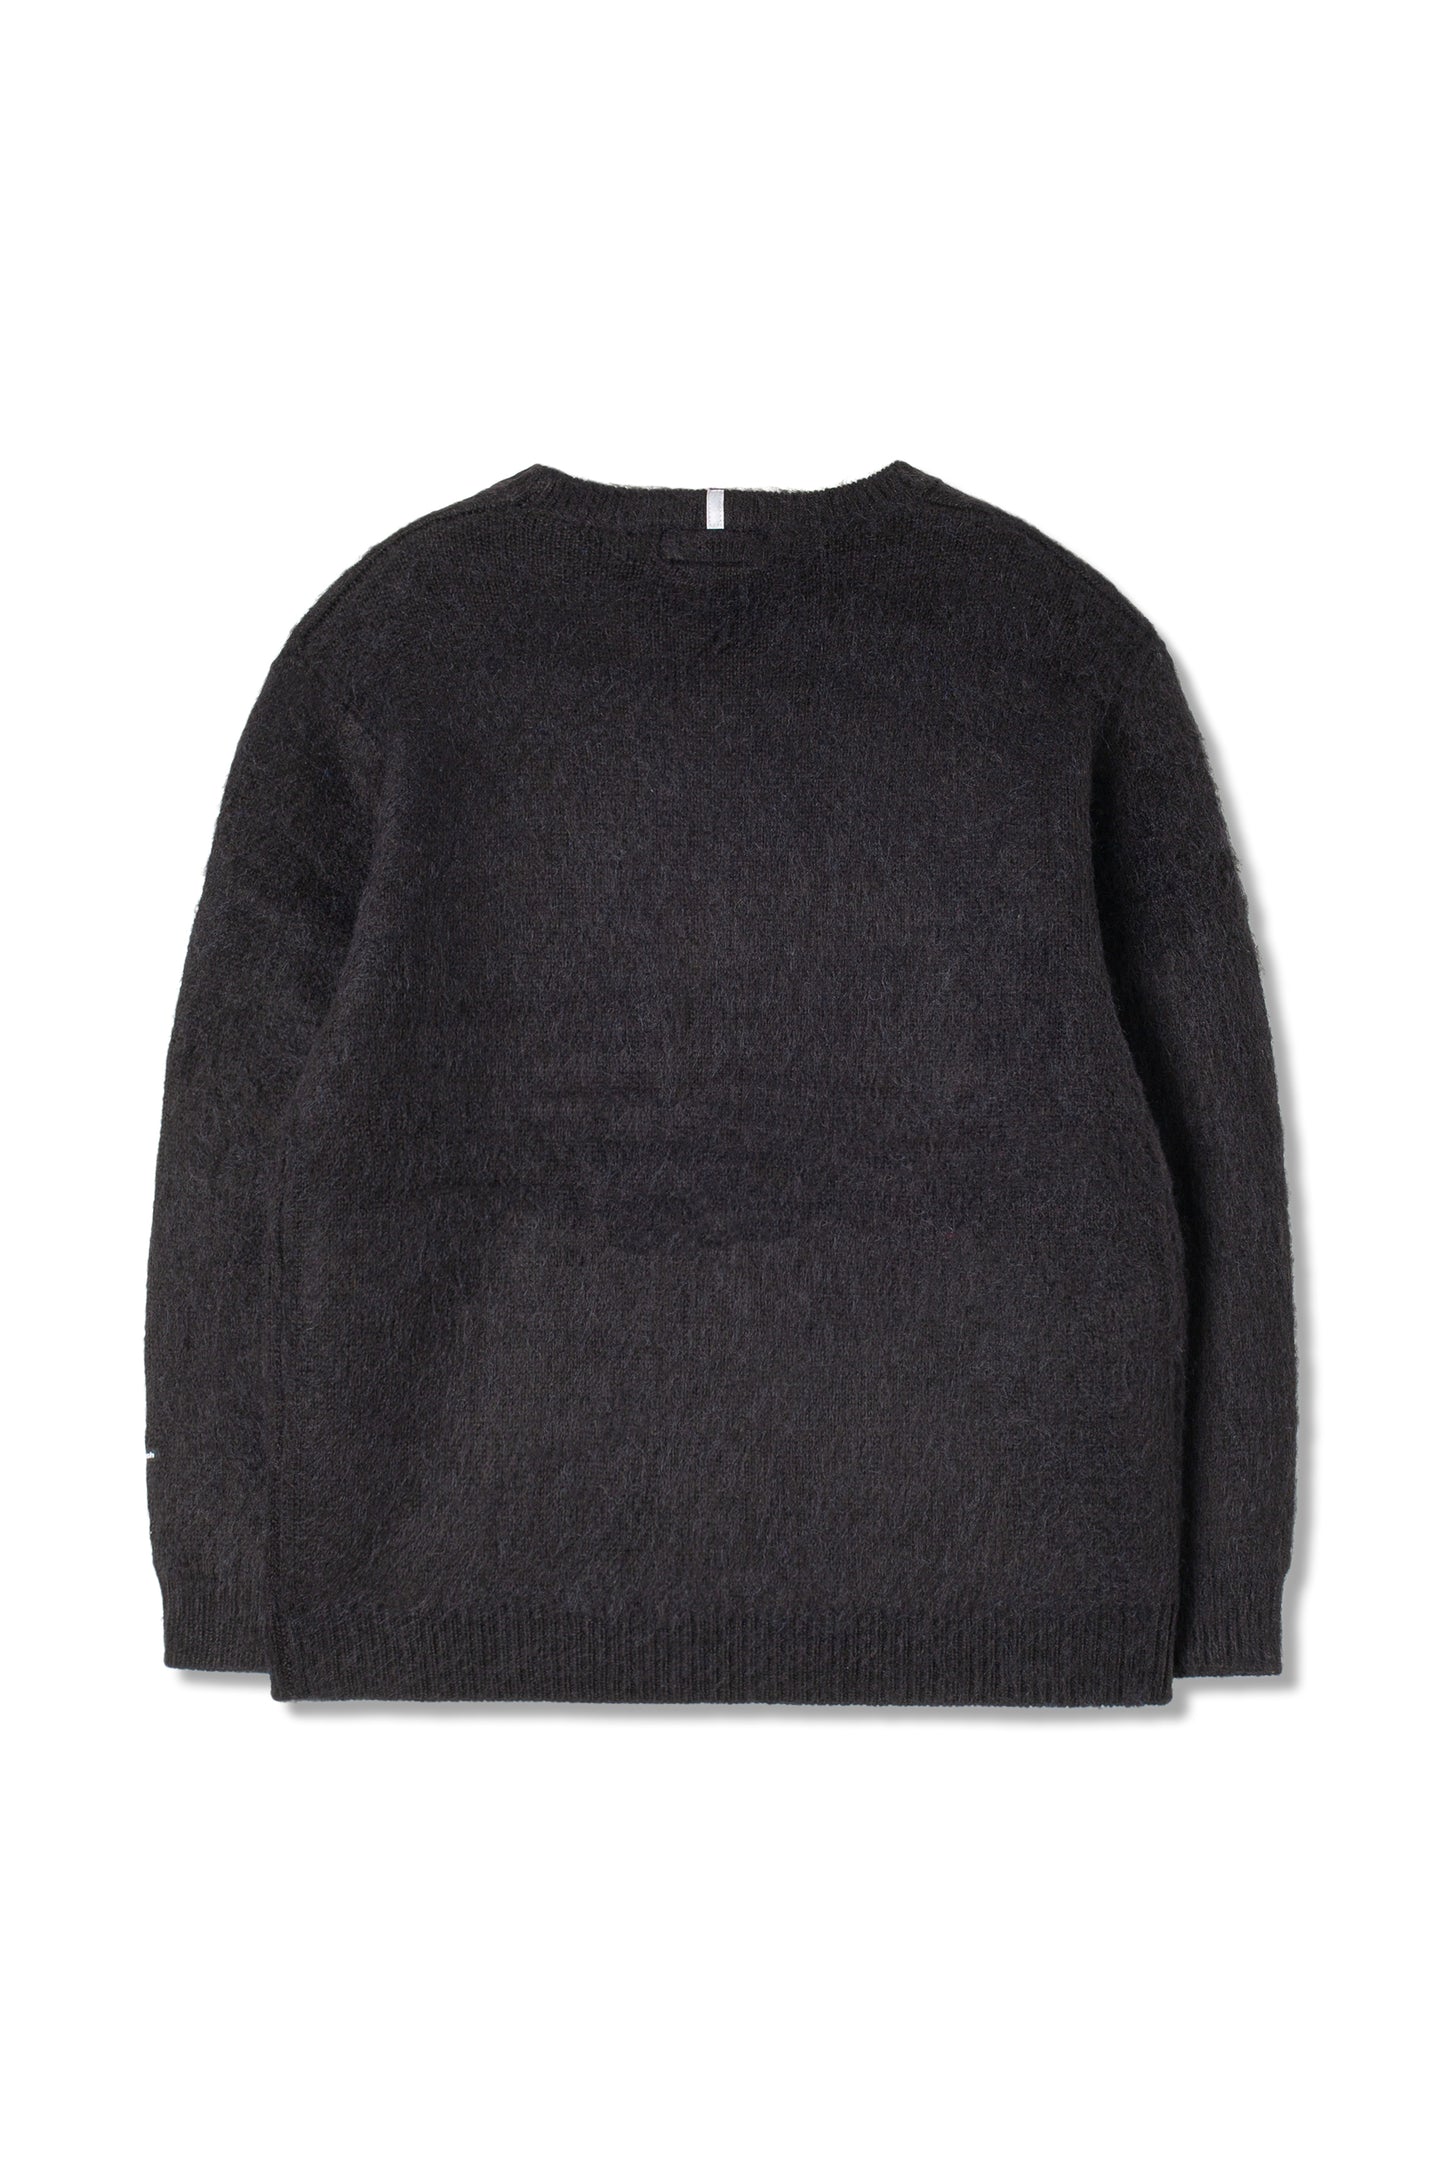 Aberdeen Sweater (Black)